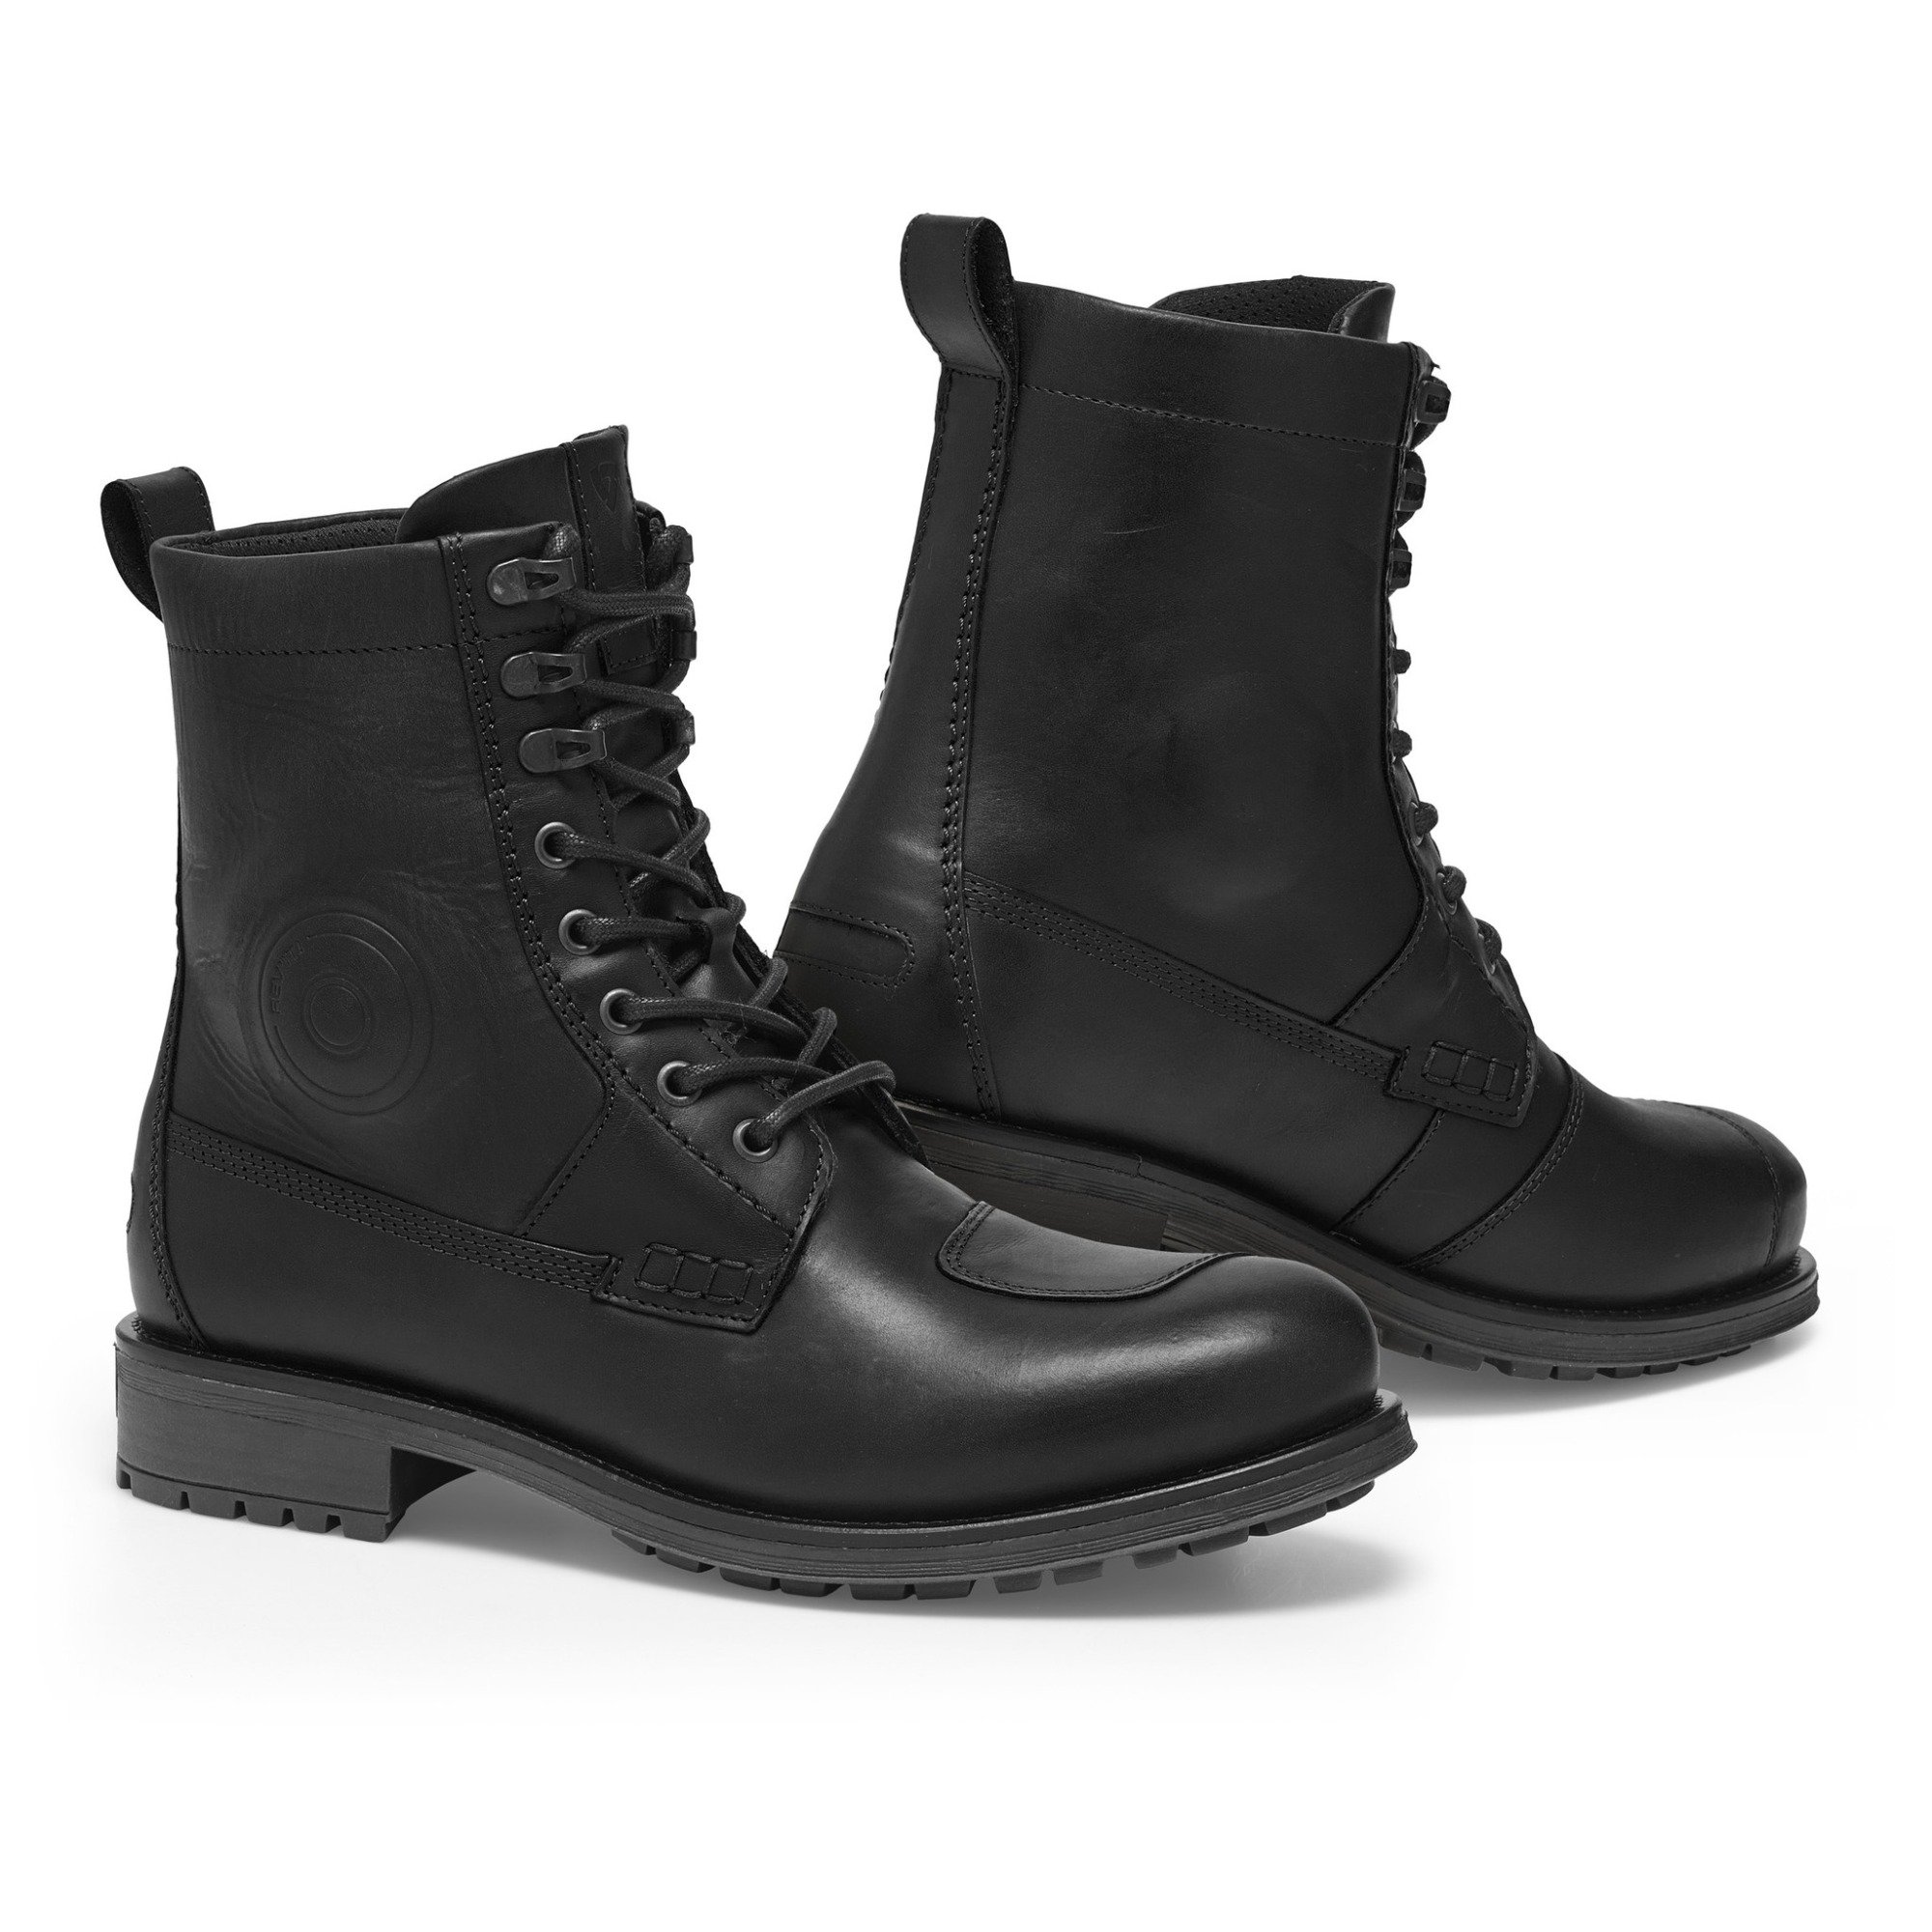 Image of REV'IT! Portland Shoes Black Size 39 ID 8700001293570